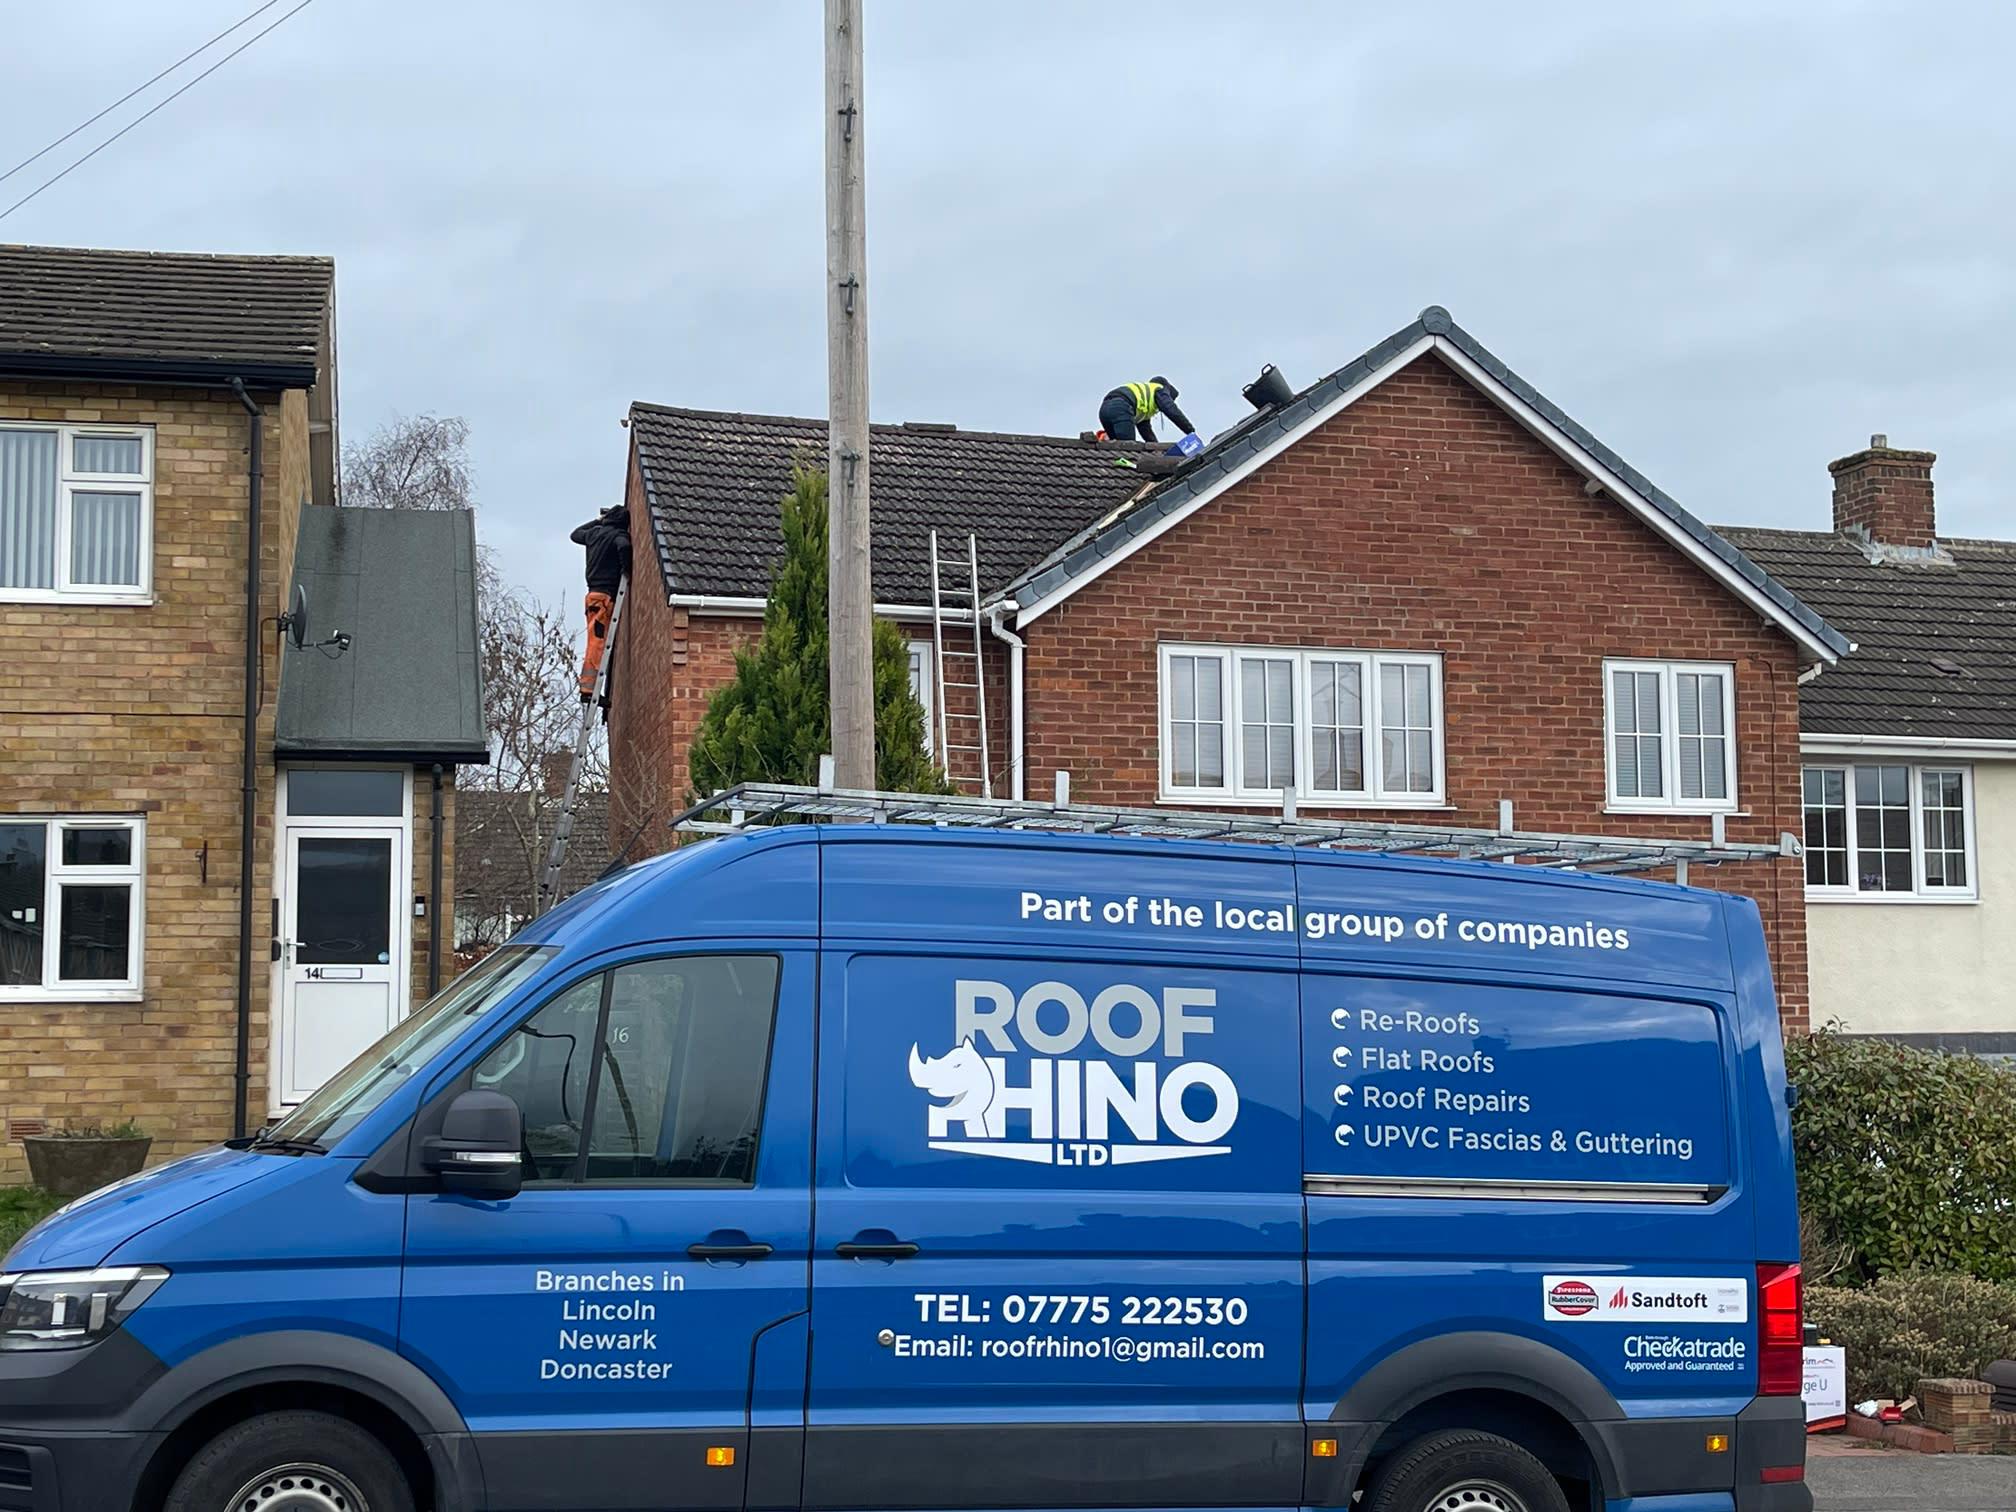 Images Roof Rhino Ltd